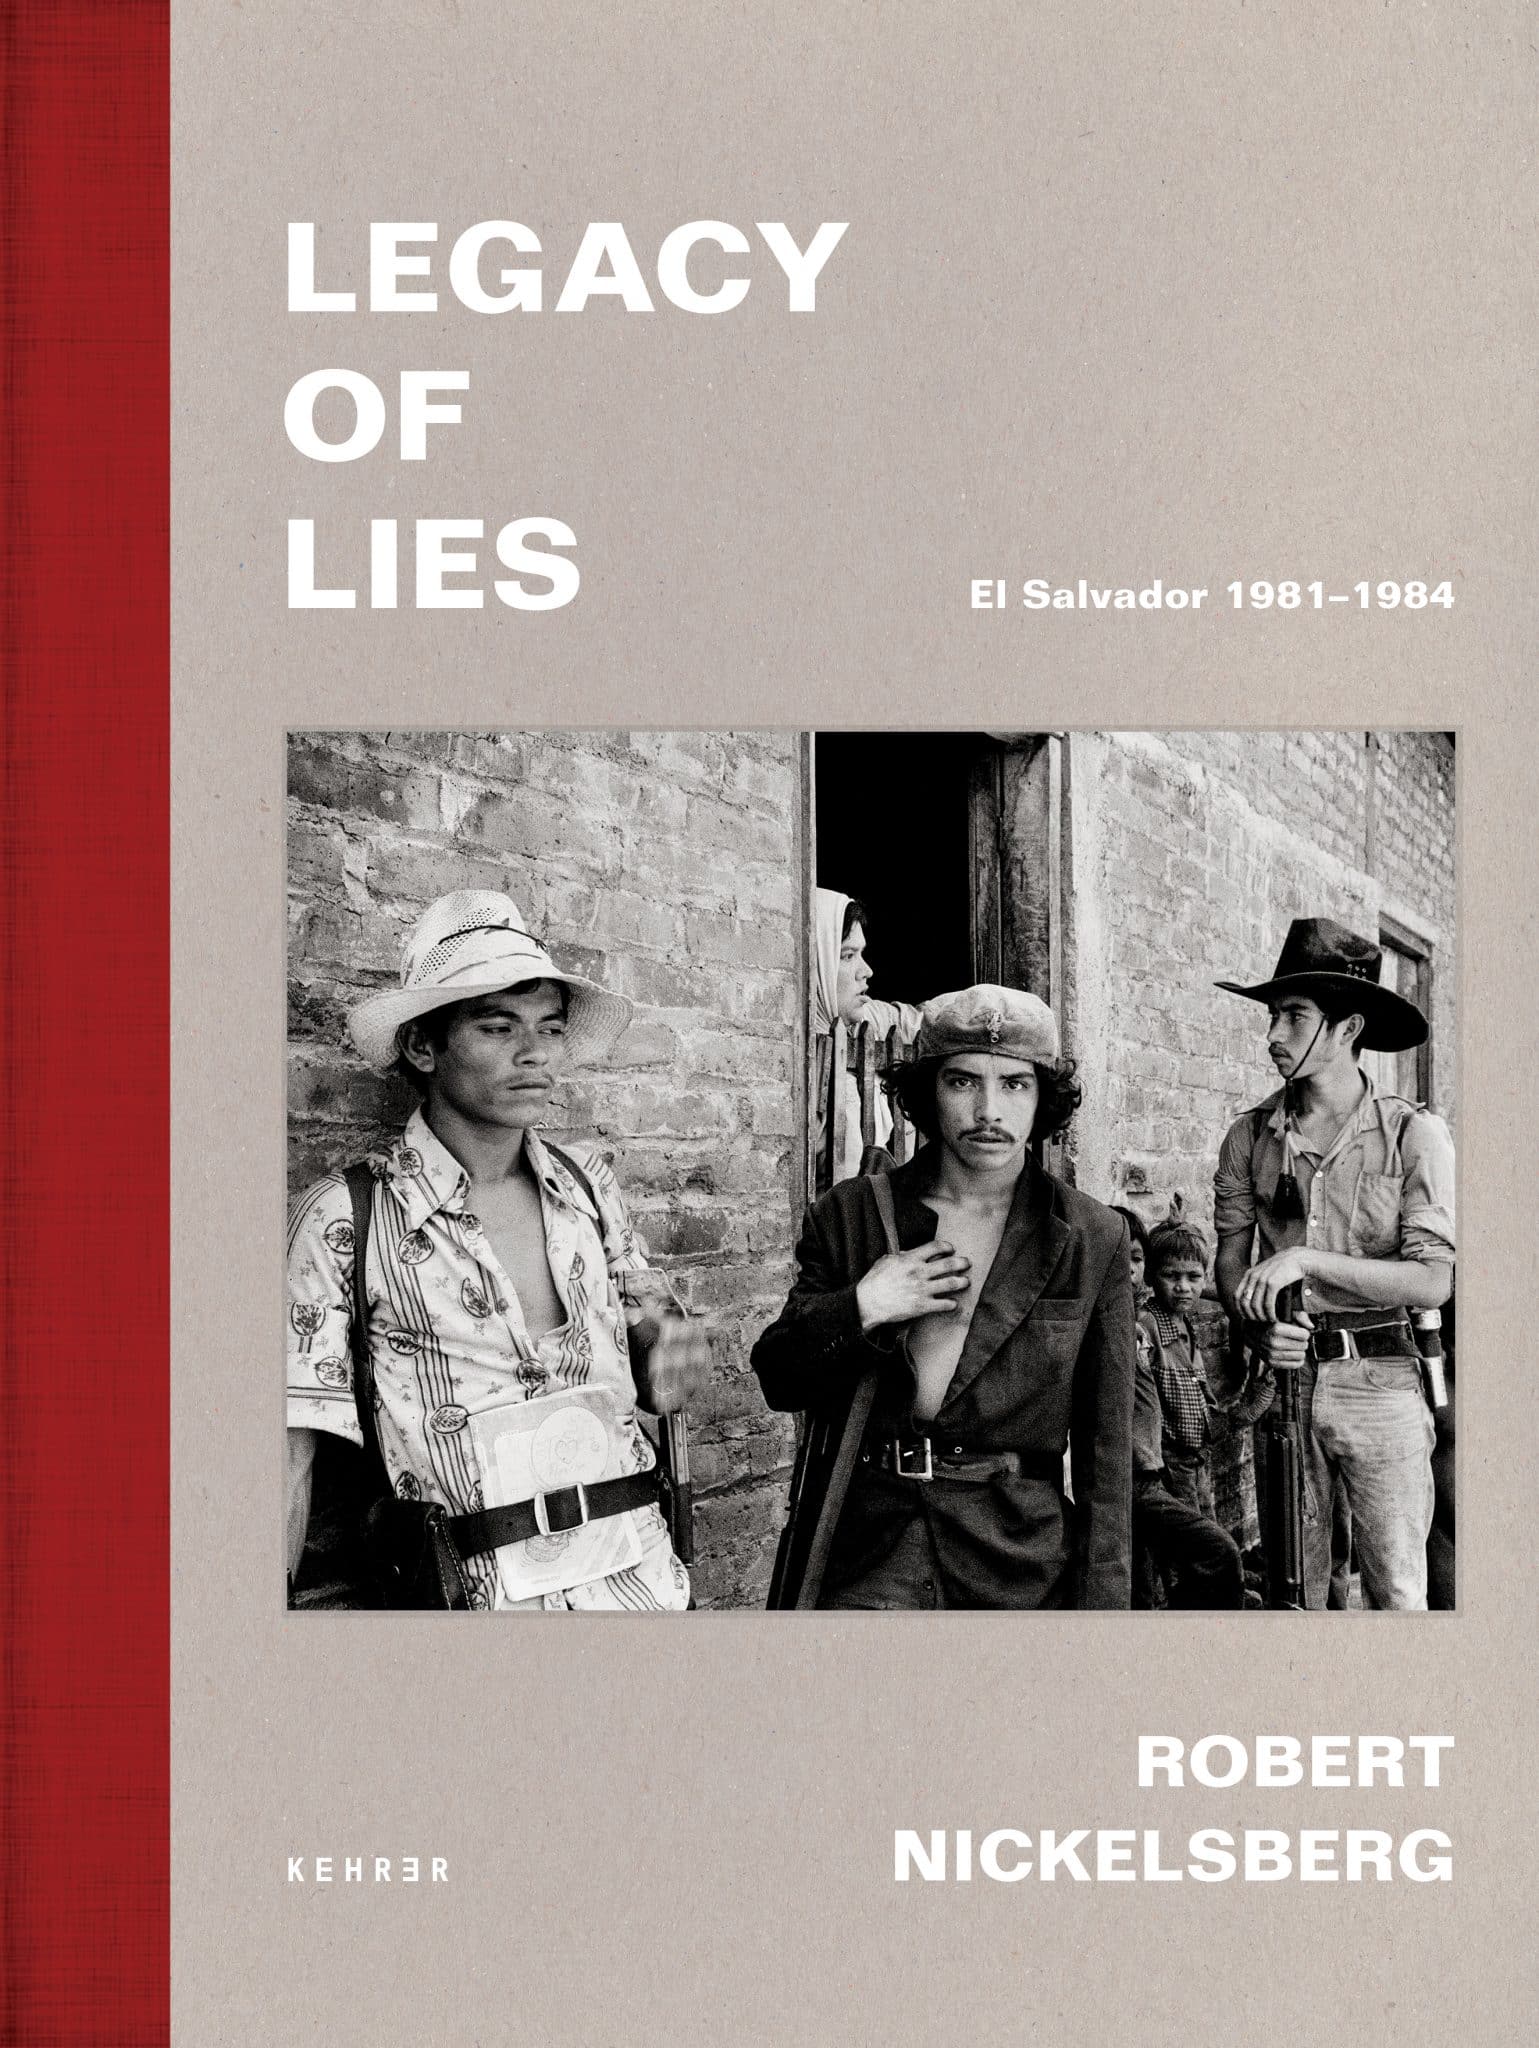 Robert Nickelsberg
Legacy of Lies
El Salvador 1981 –1984